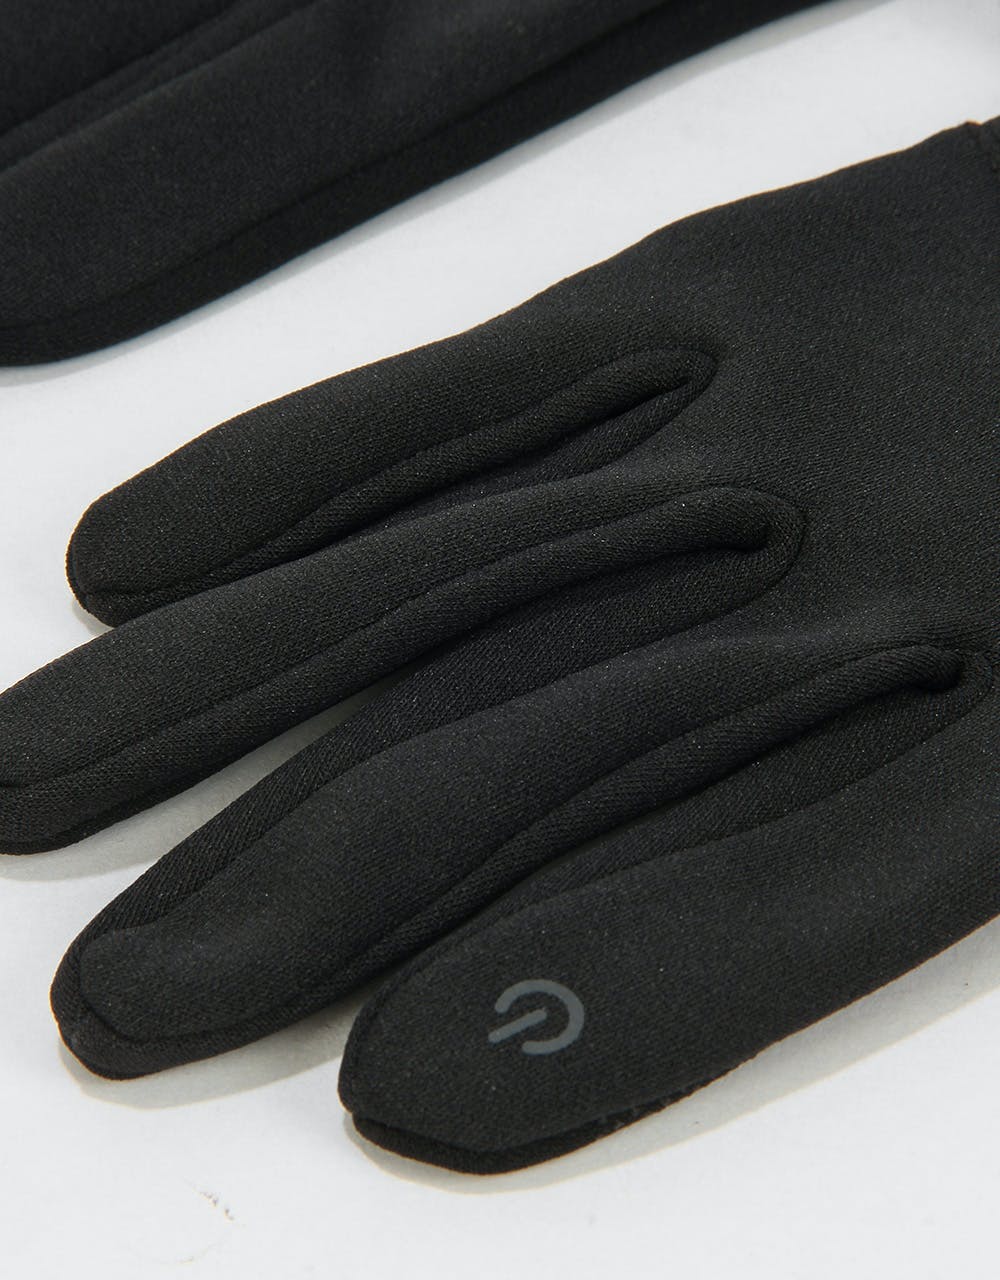 The North Face Etip Gloves - TNF Black